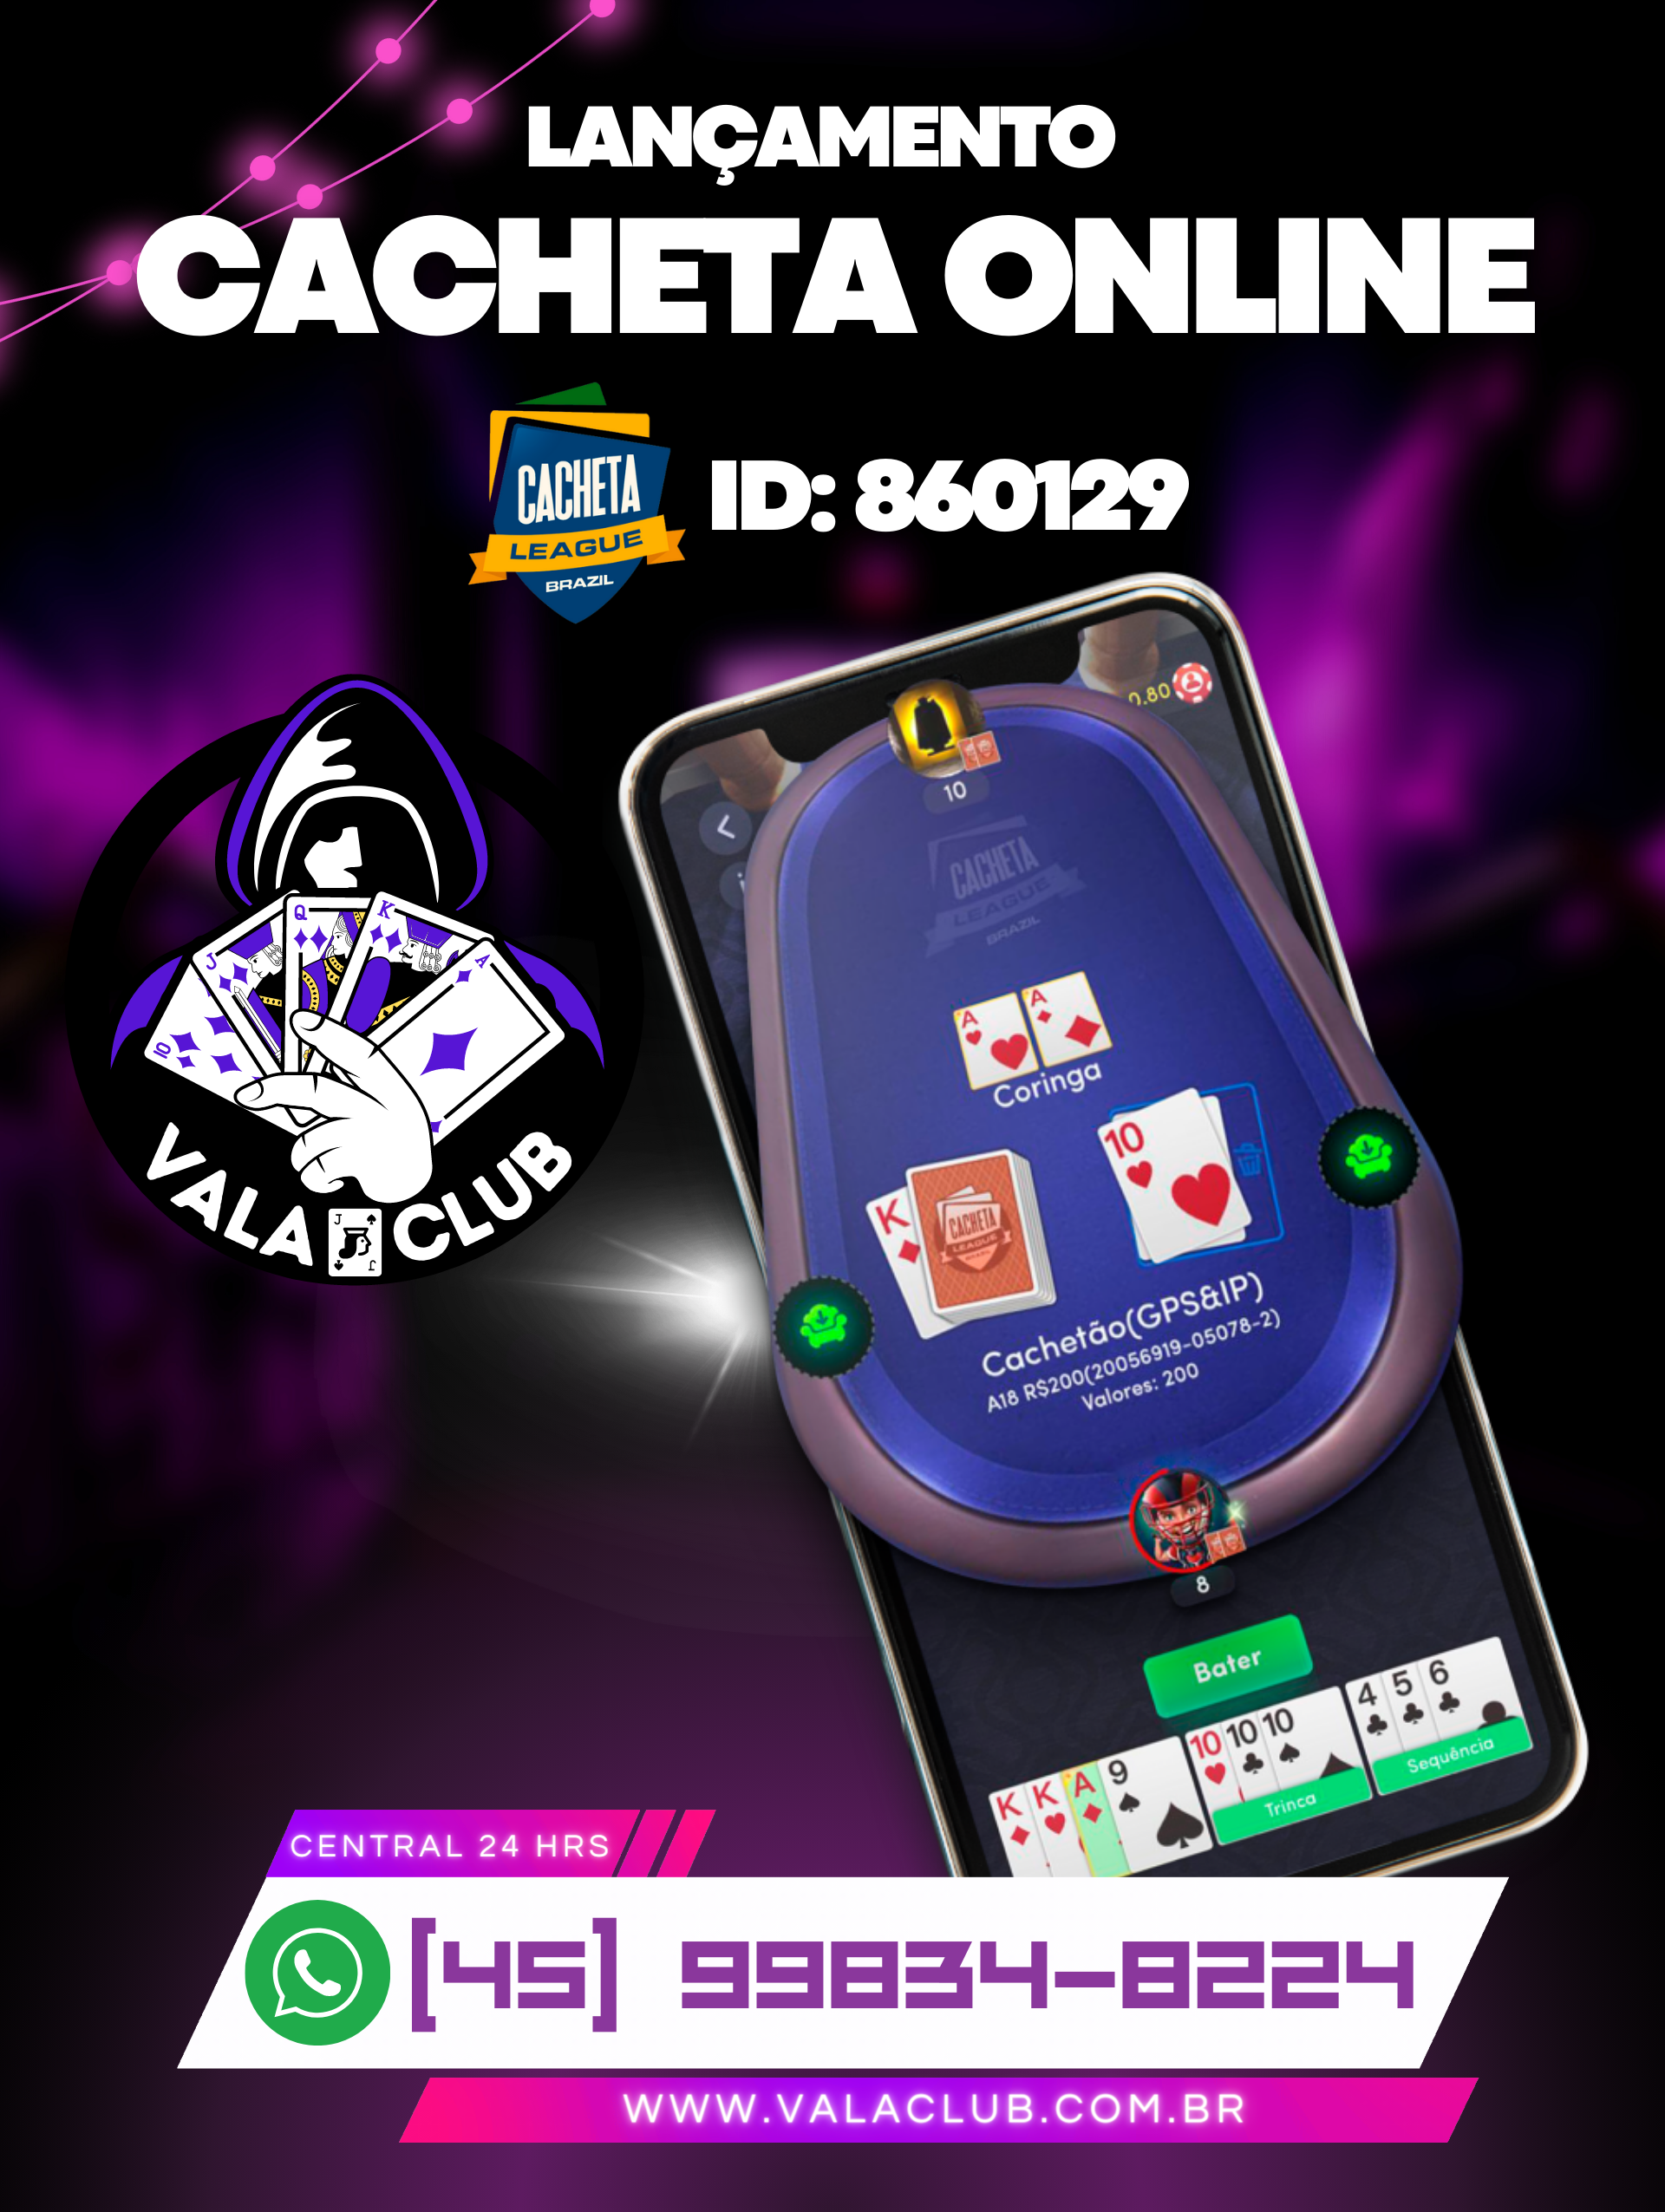 Clube de Cacheta Online - Central de Atendimento Vala Club 24 hrs